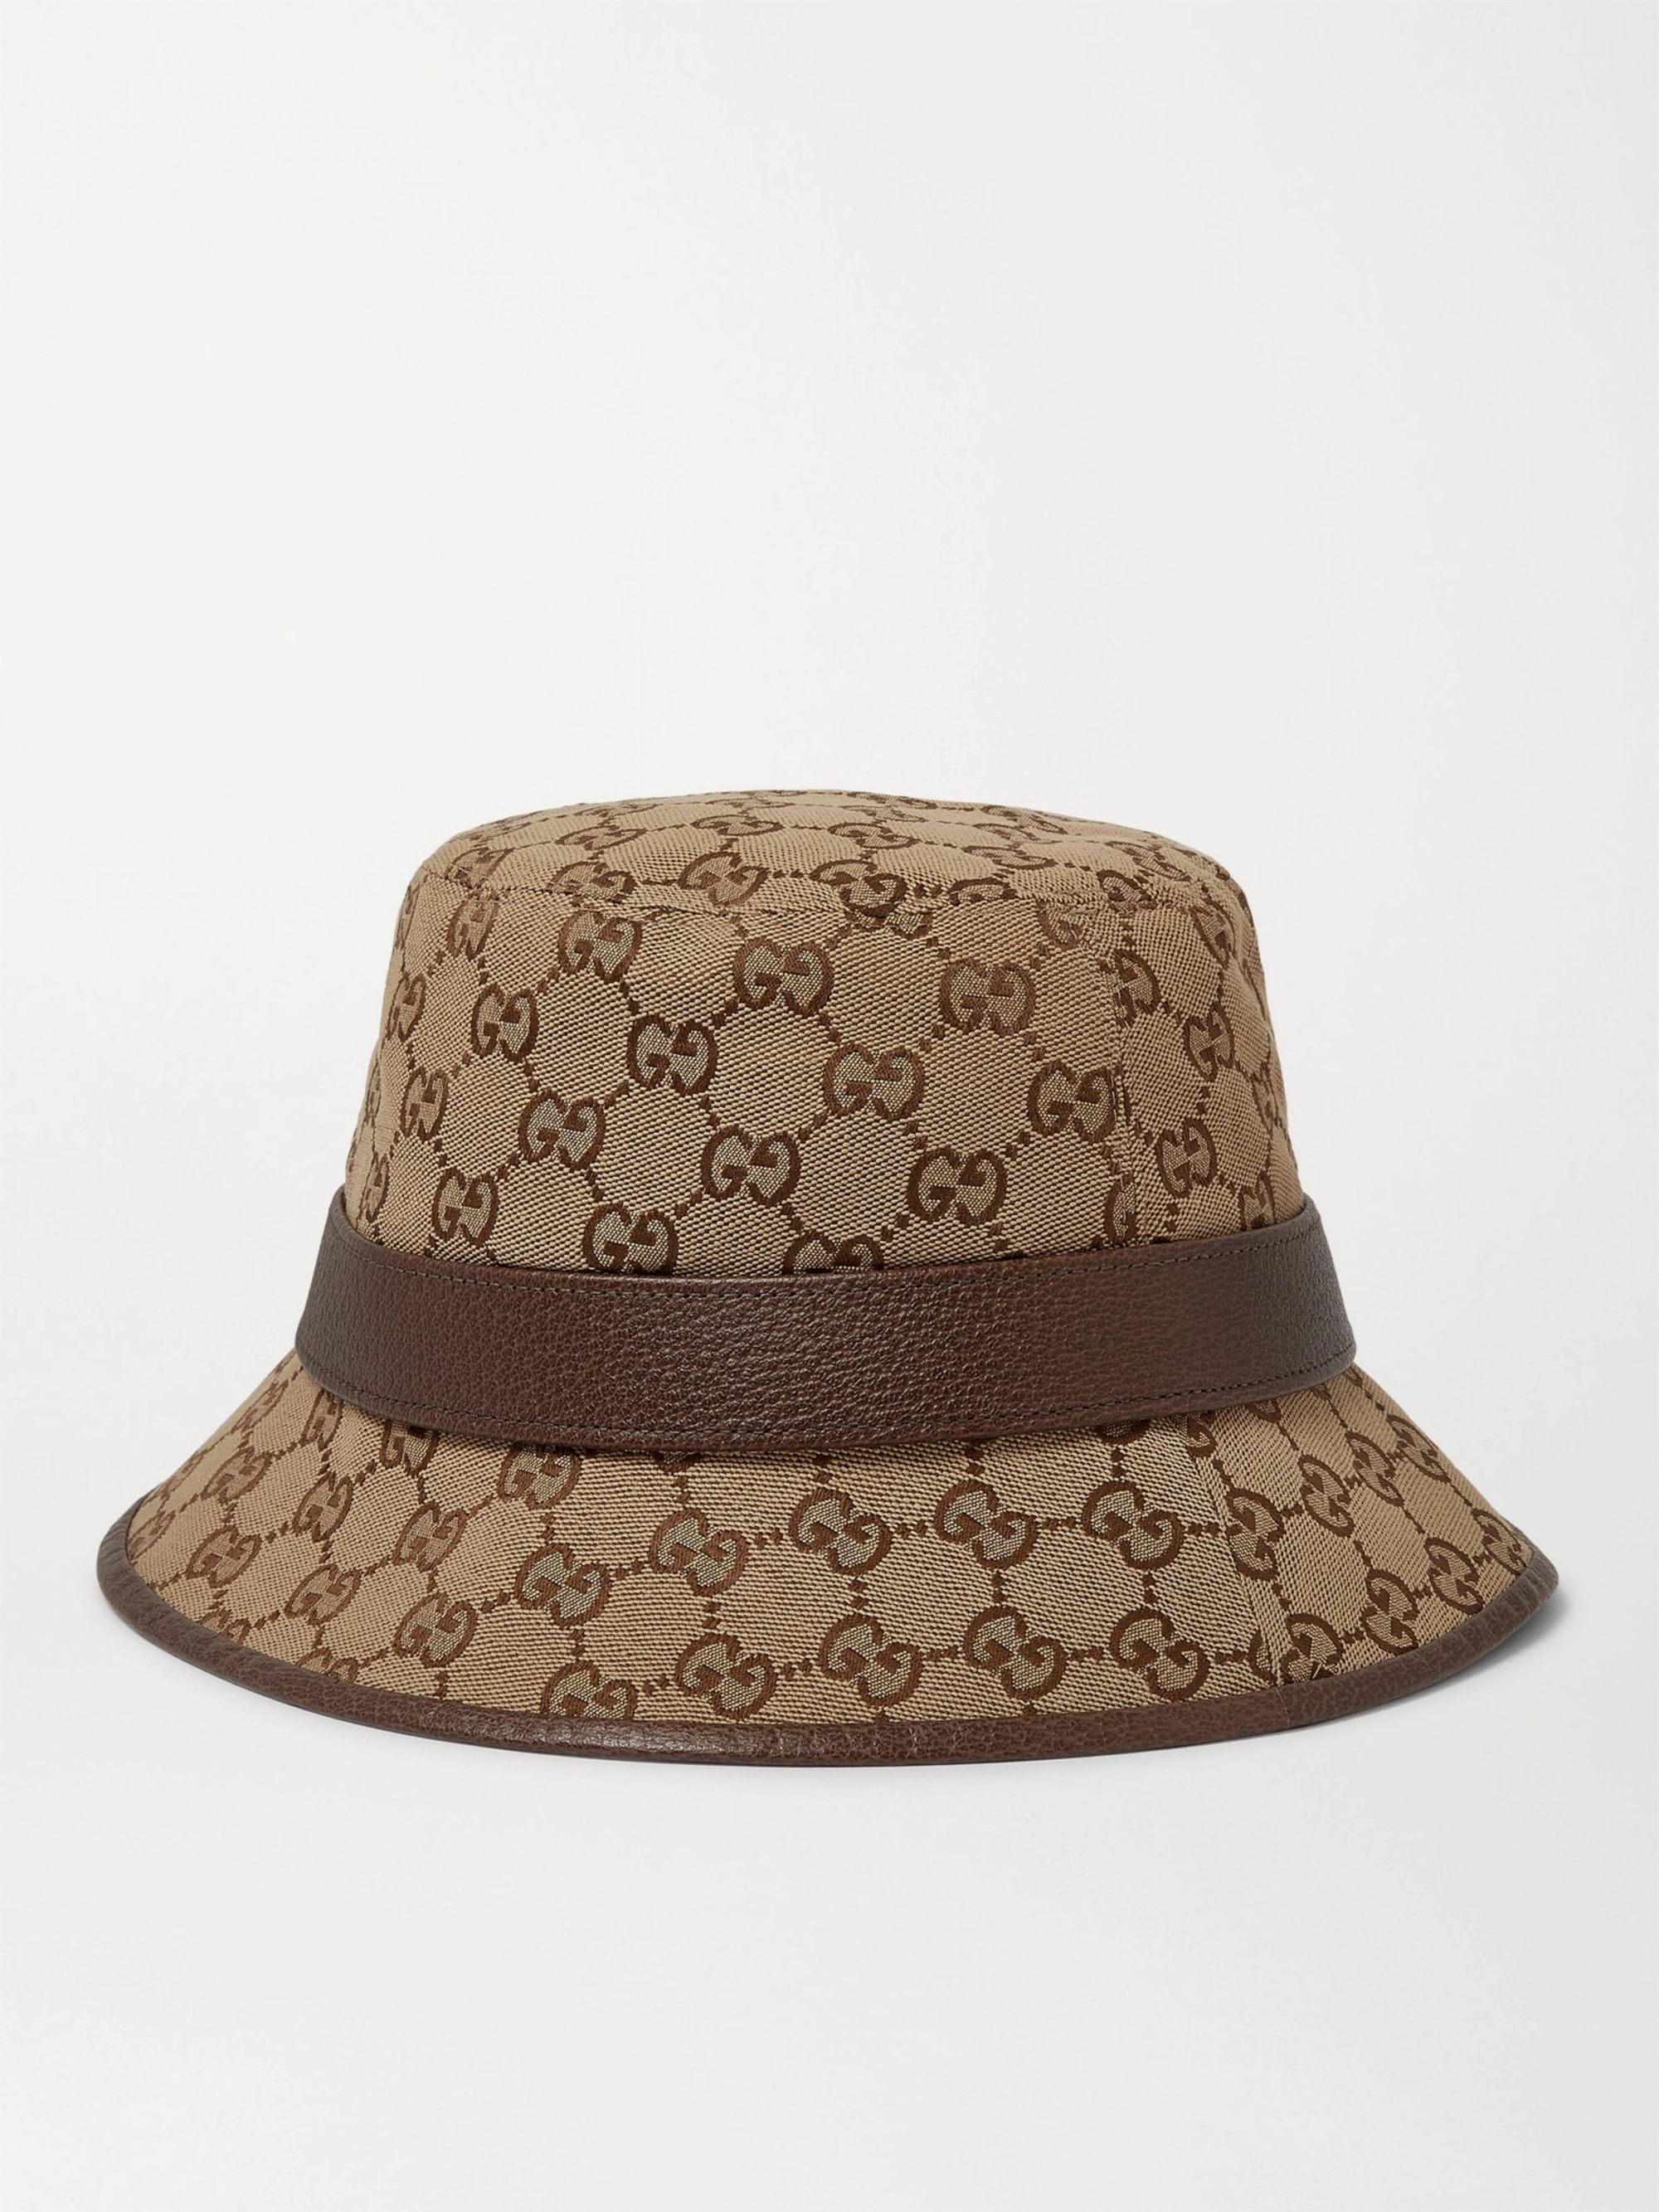 Brown Leather-Trimmed Monogrammed Canvas Bucket Hat | Gucci | MR PORTER